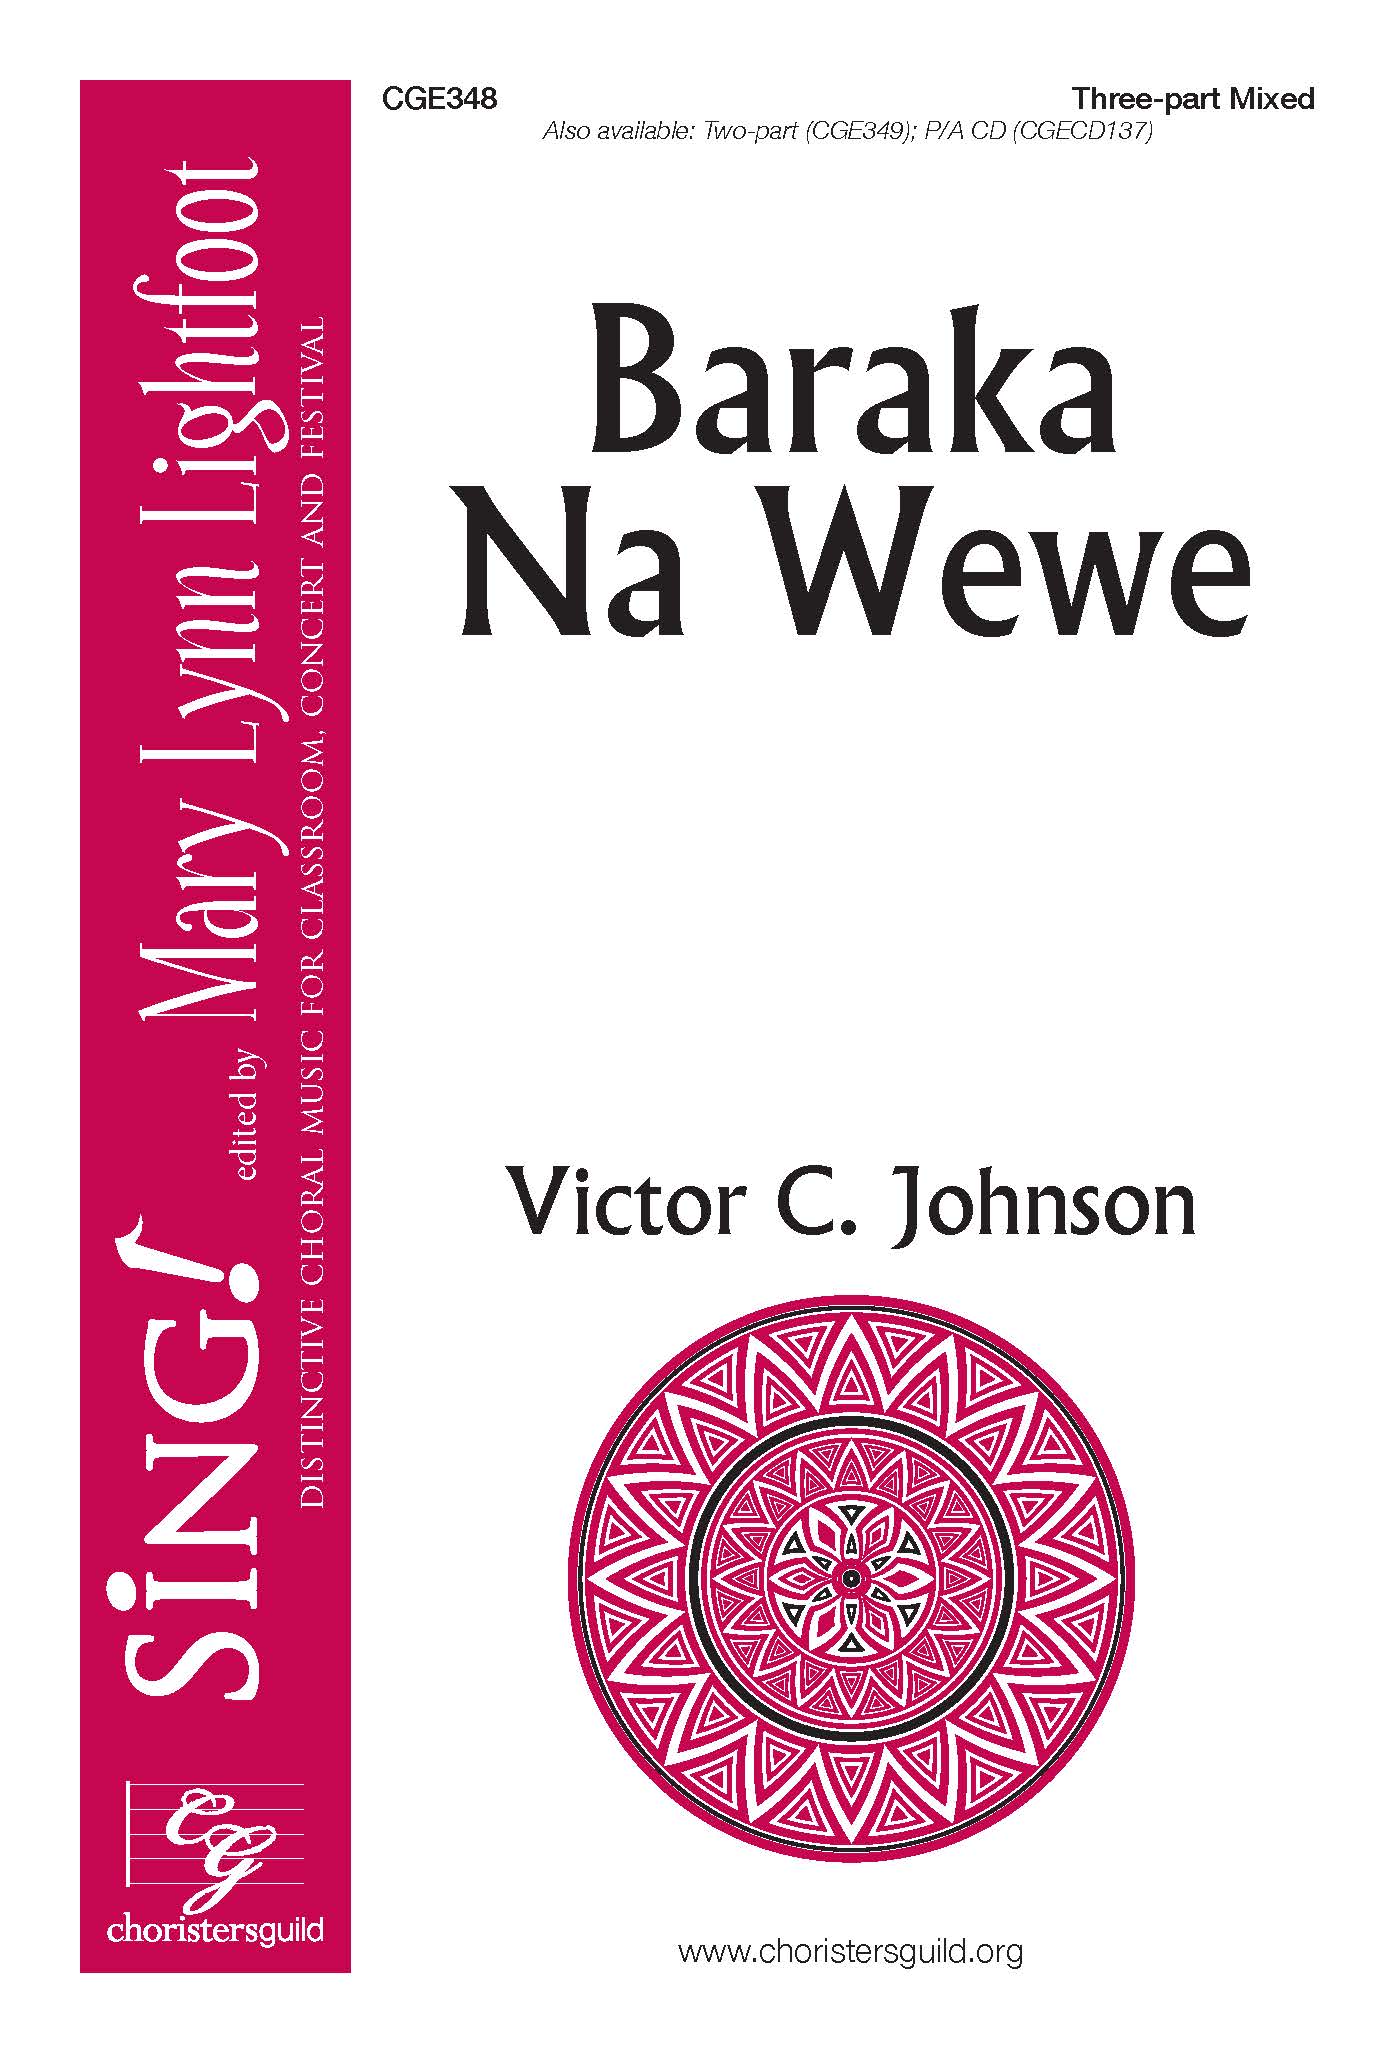 Baraka Na Wewe - Three-part Mixed